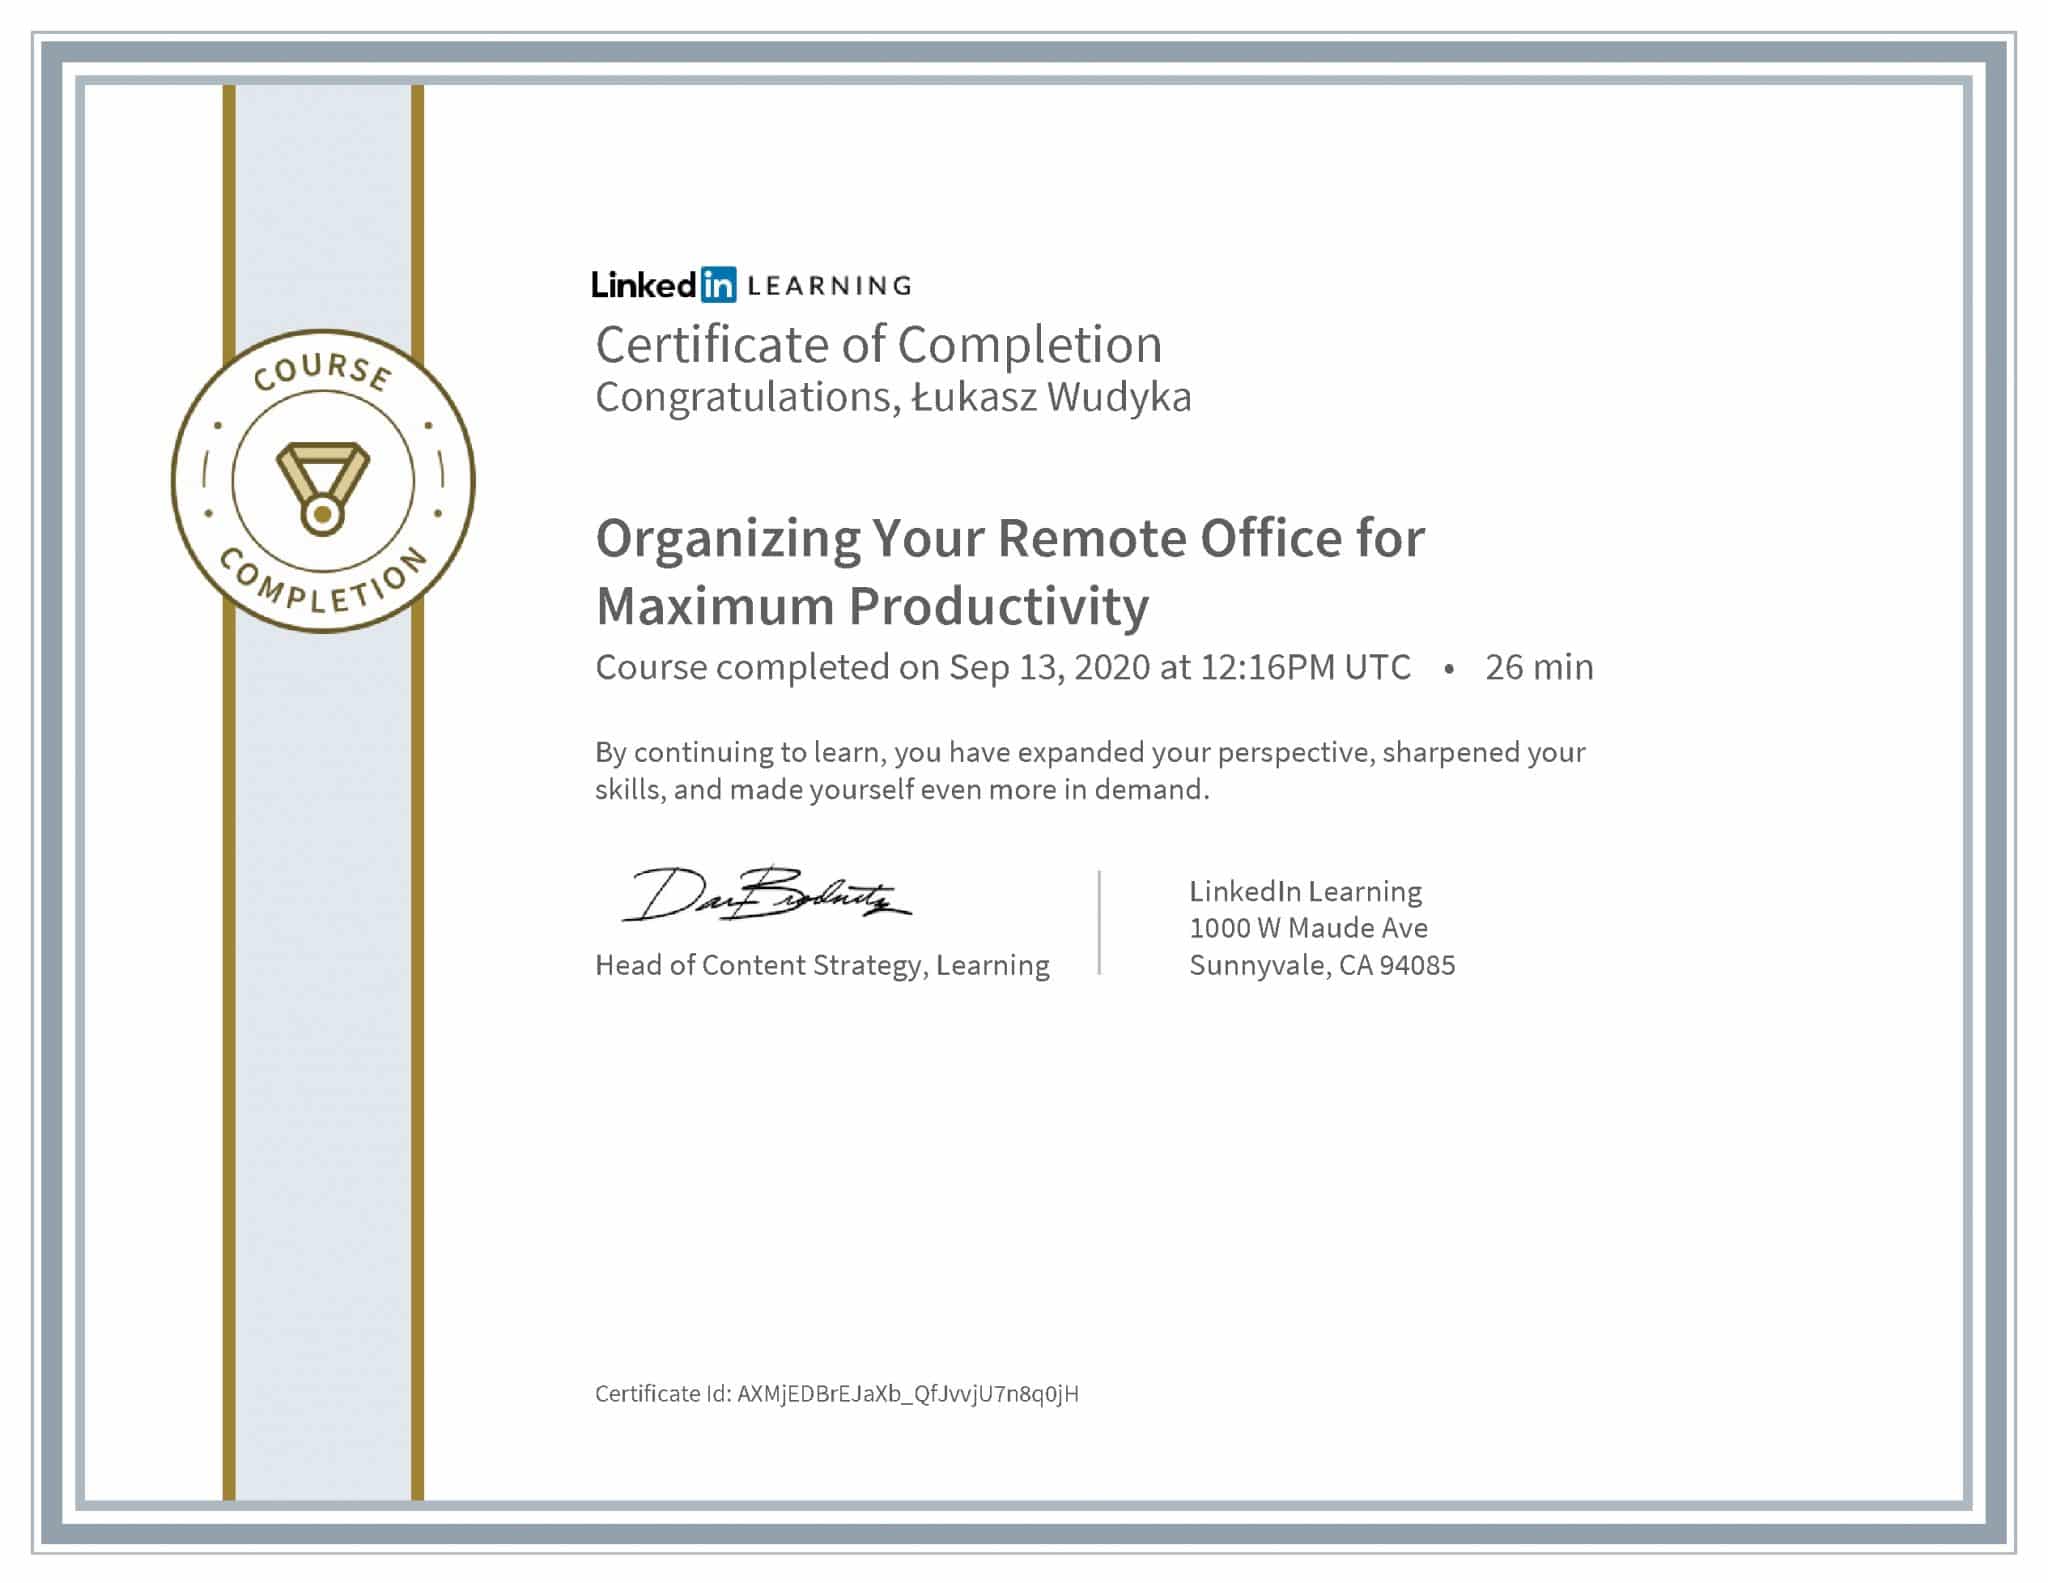 Łukasz Wudyka certyfikat LinkedIn Organizing Your Remote Office for Maximum Productivity